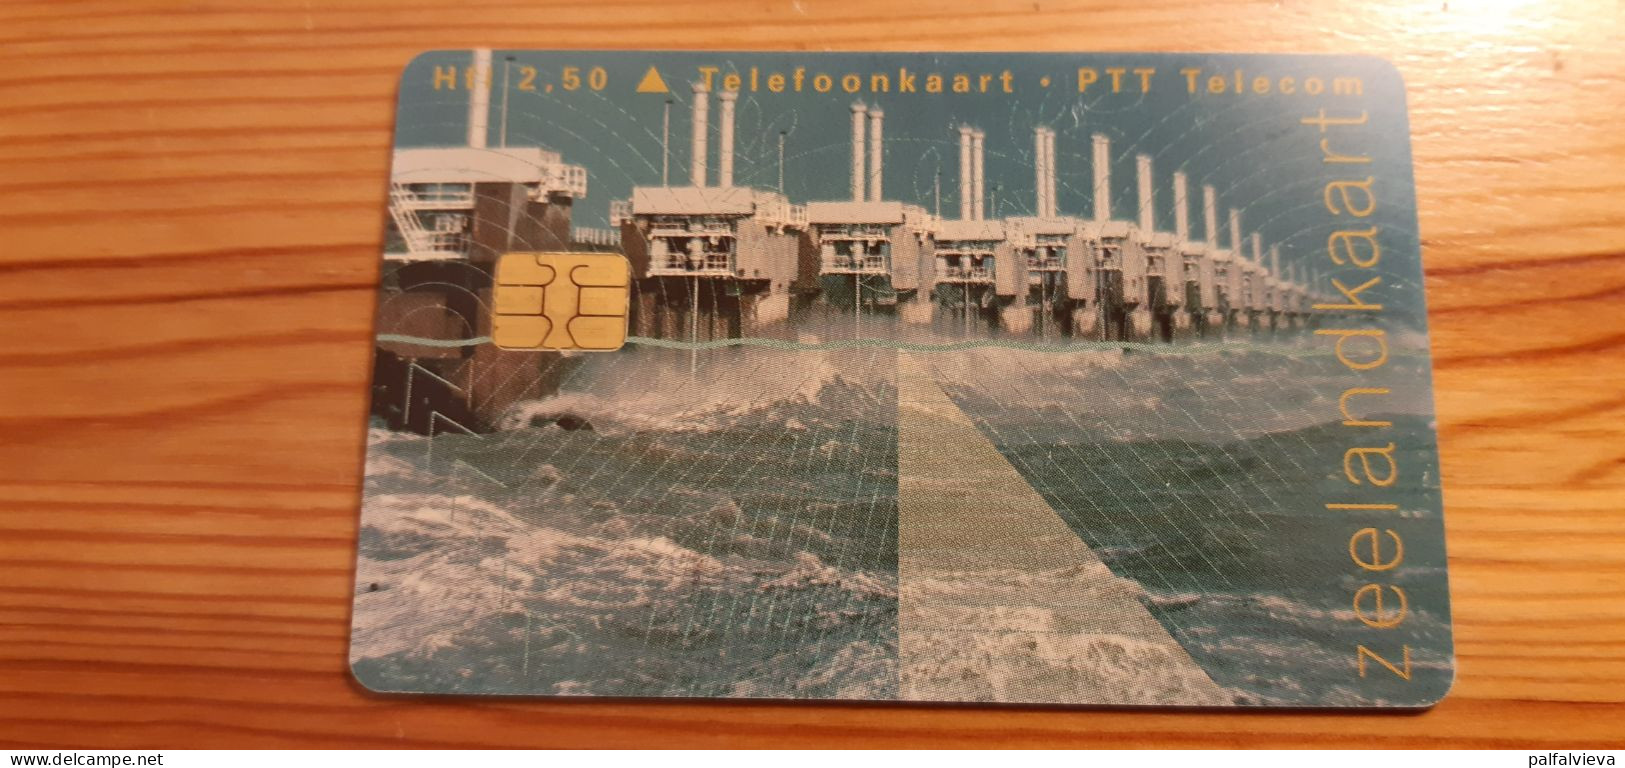 Phonecard Netherlands - Zeelandkaart - Pubbliche